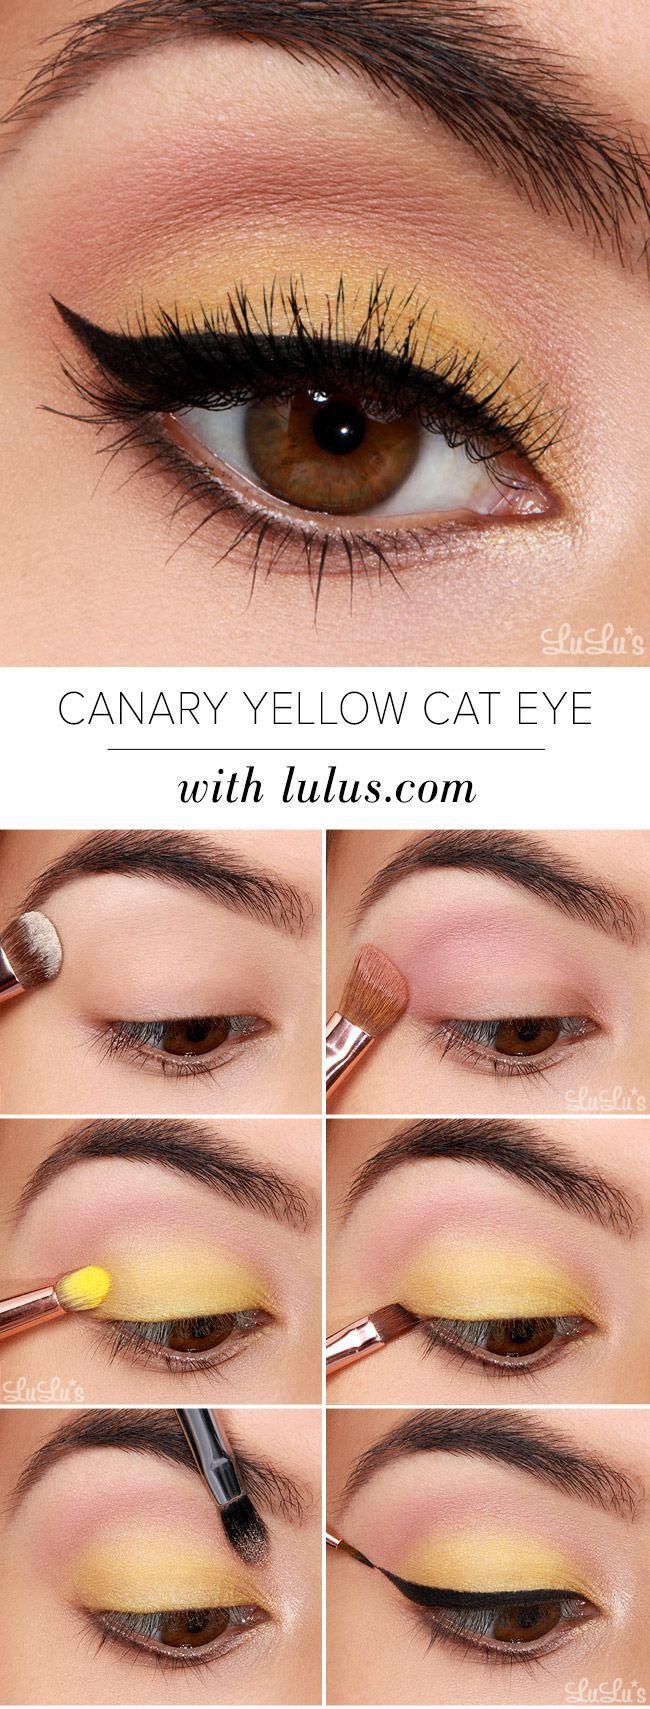 Wedding - Canary Yellow Cat Eye